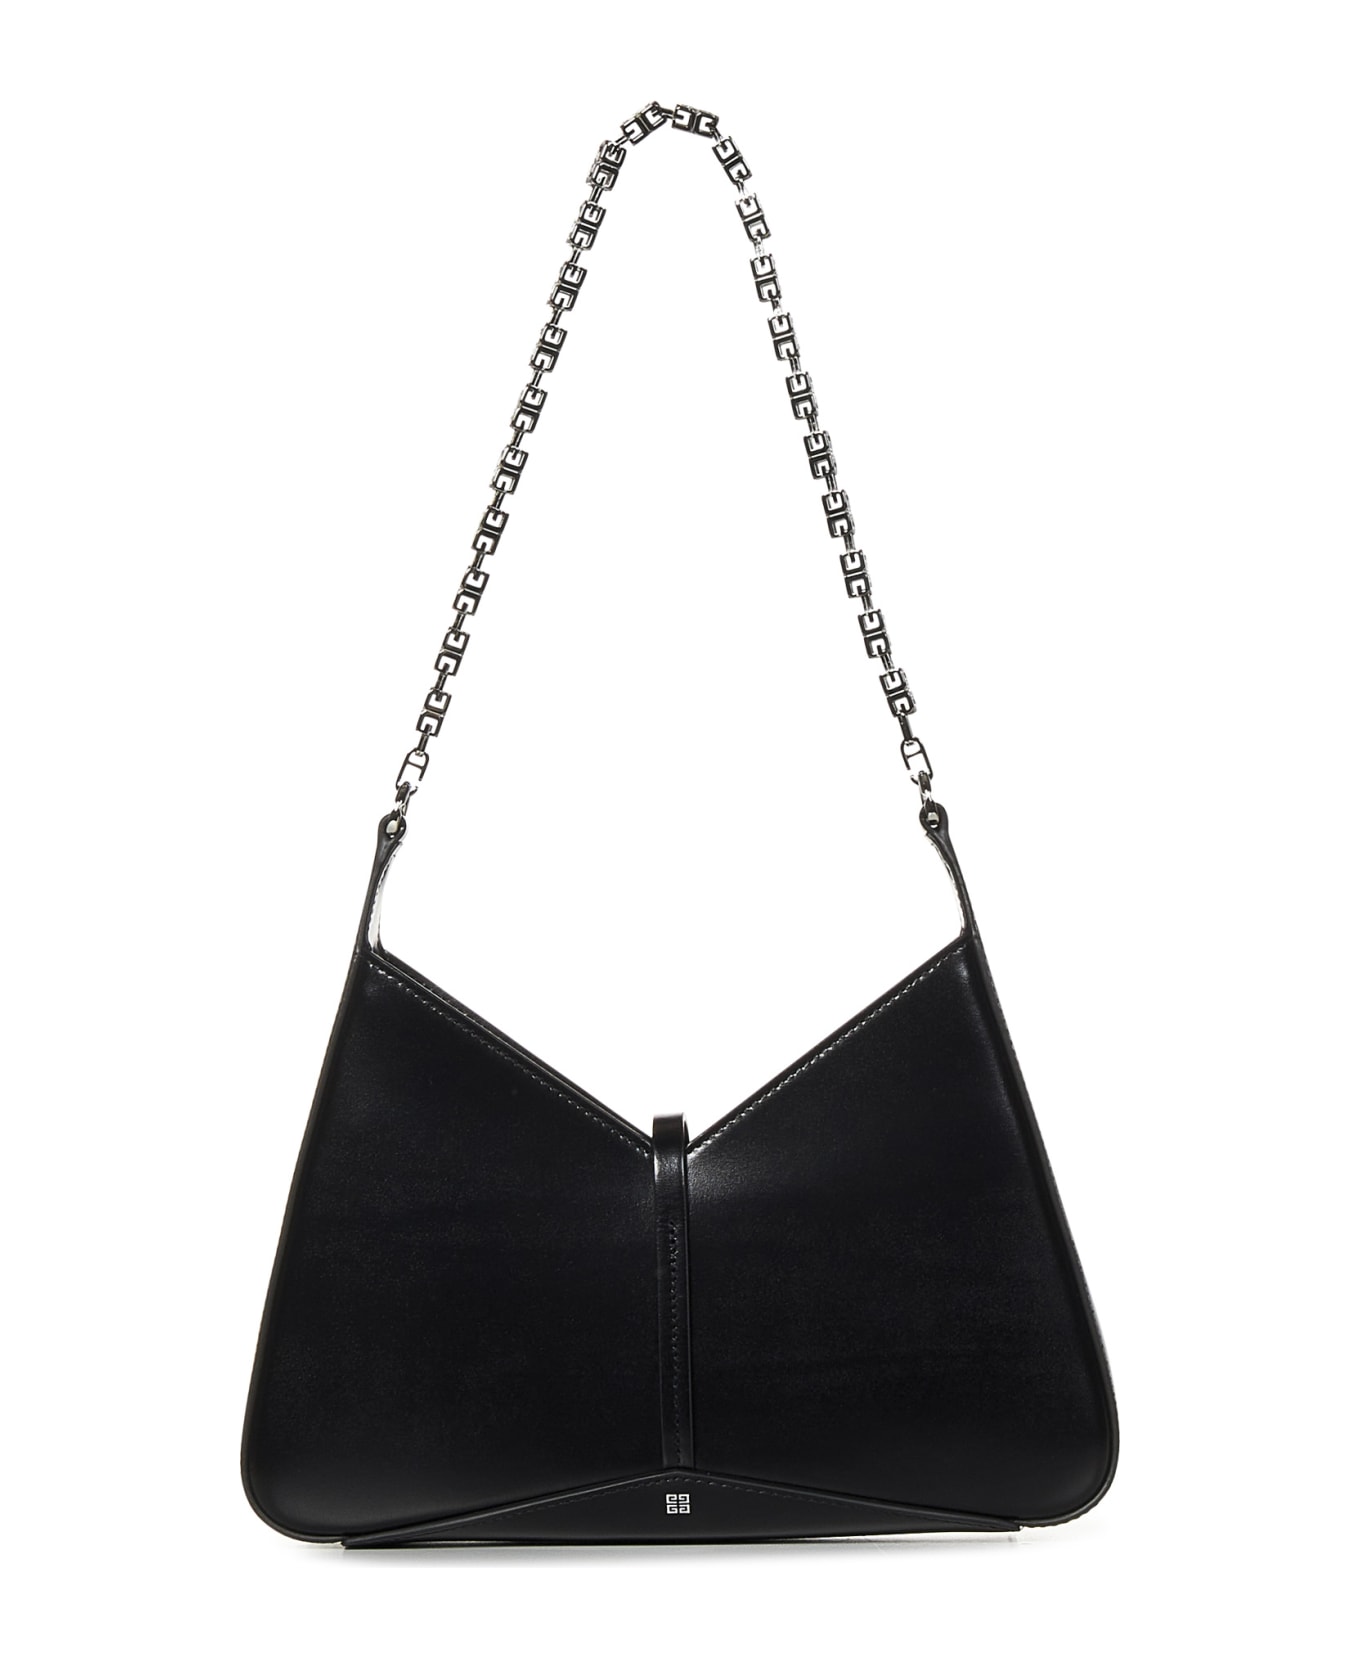 Givenchy Cut Out Small Shoulder Bag - Black